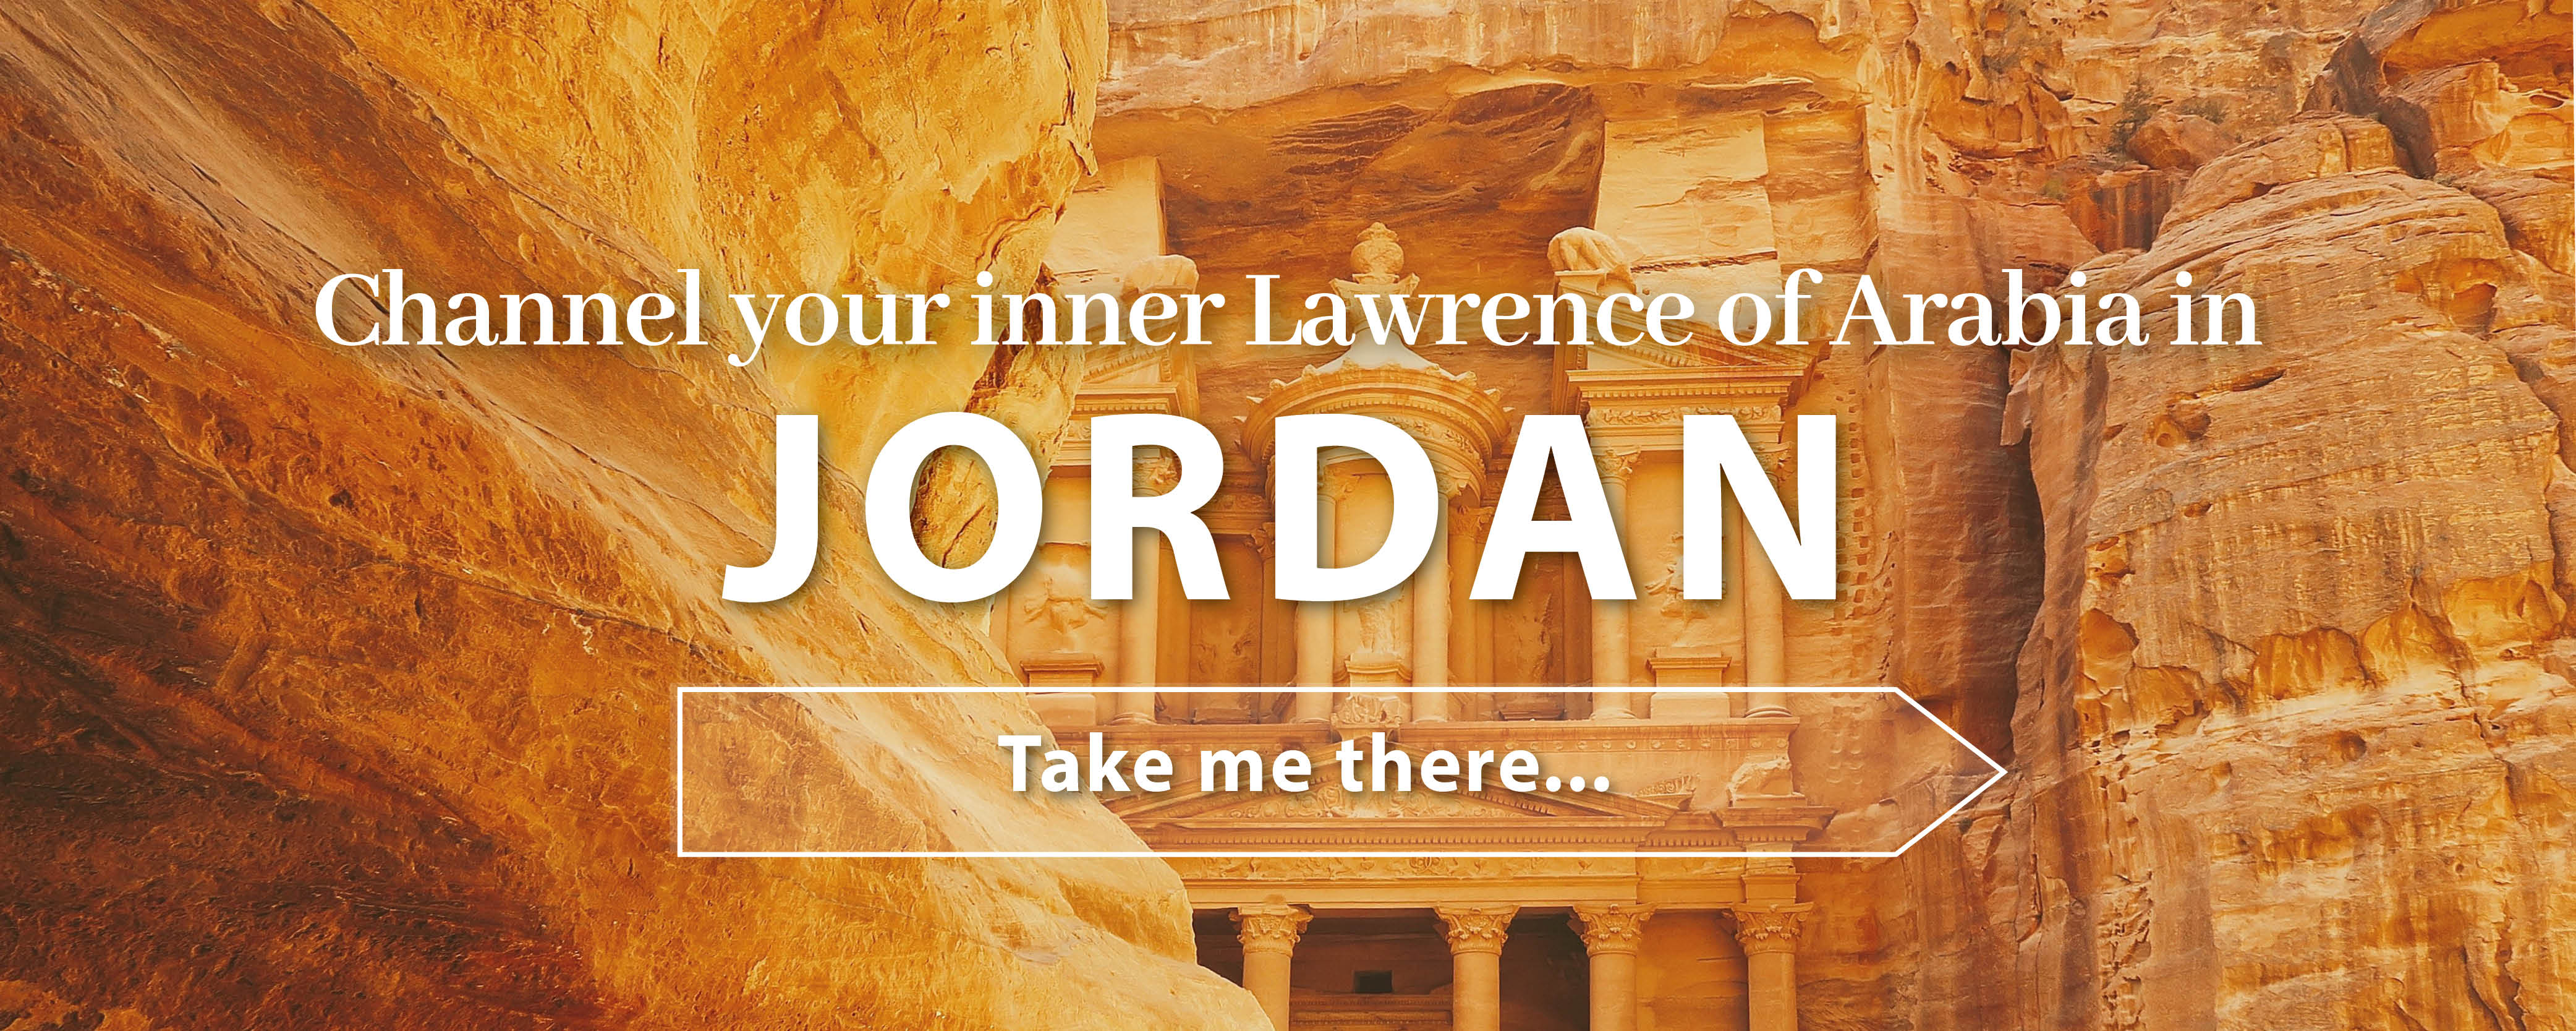 test free travel destinations Jordan